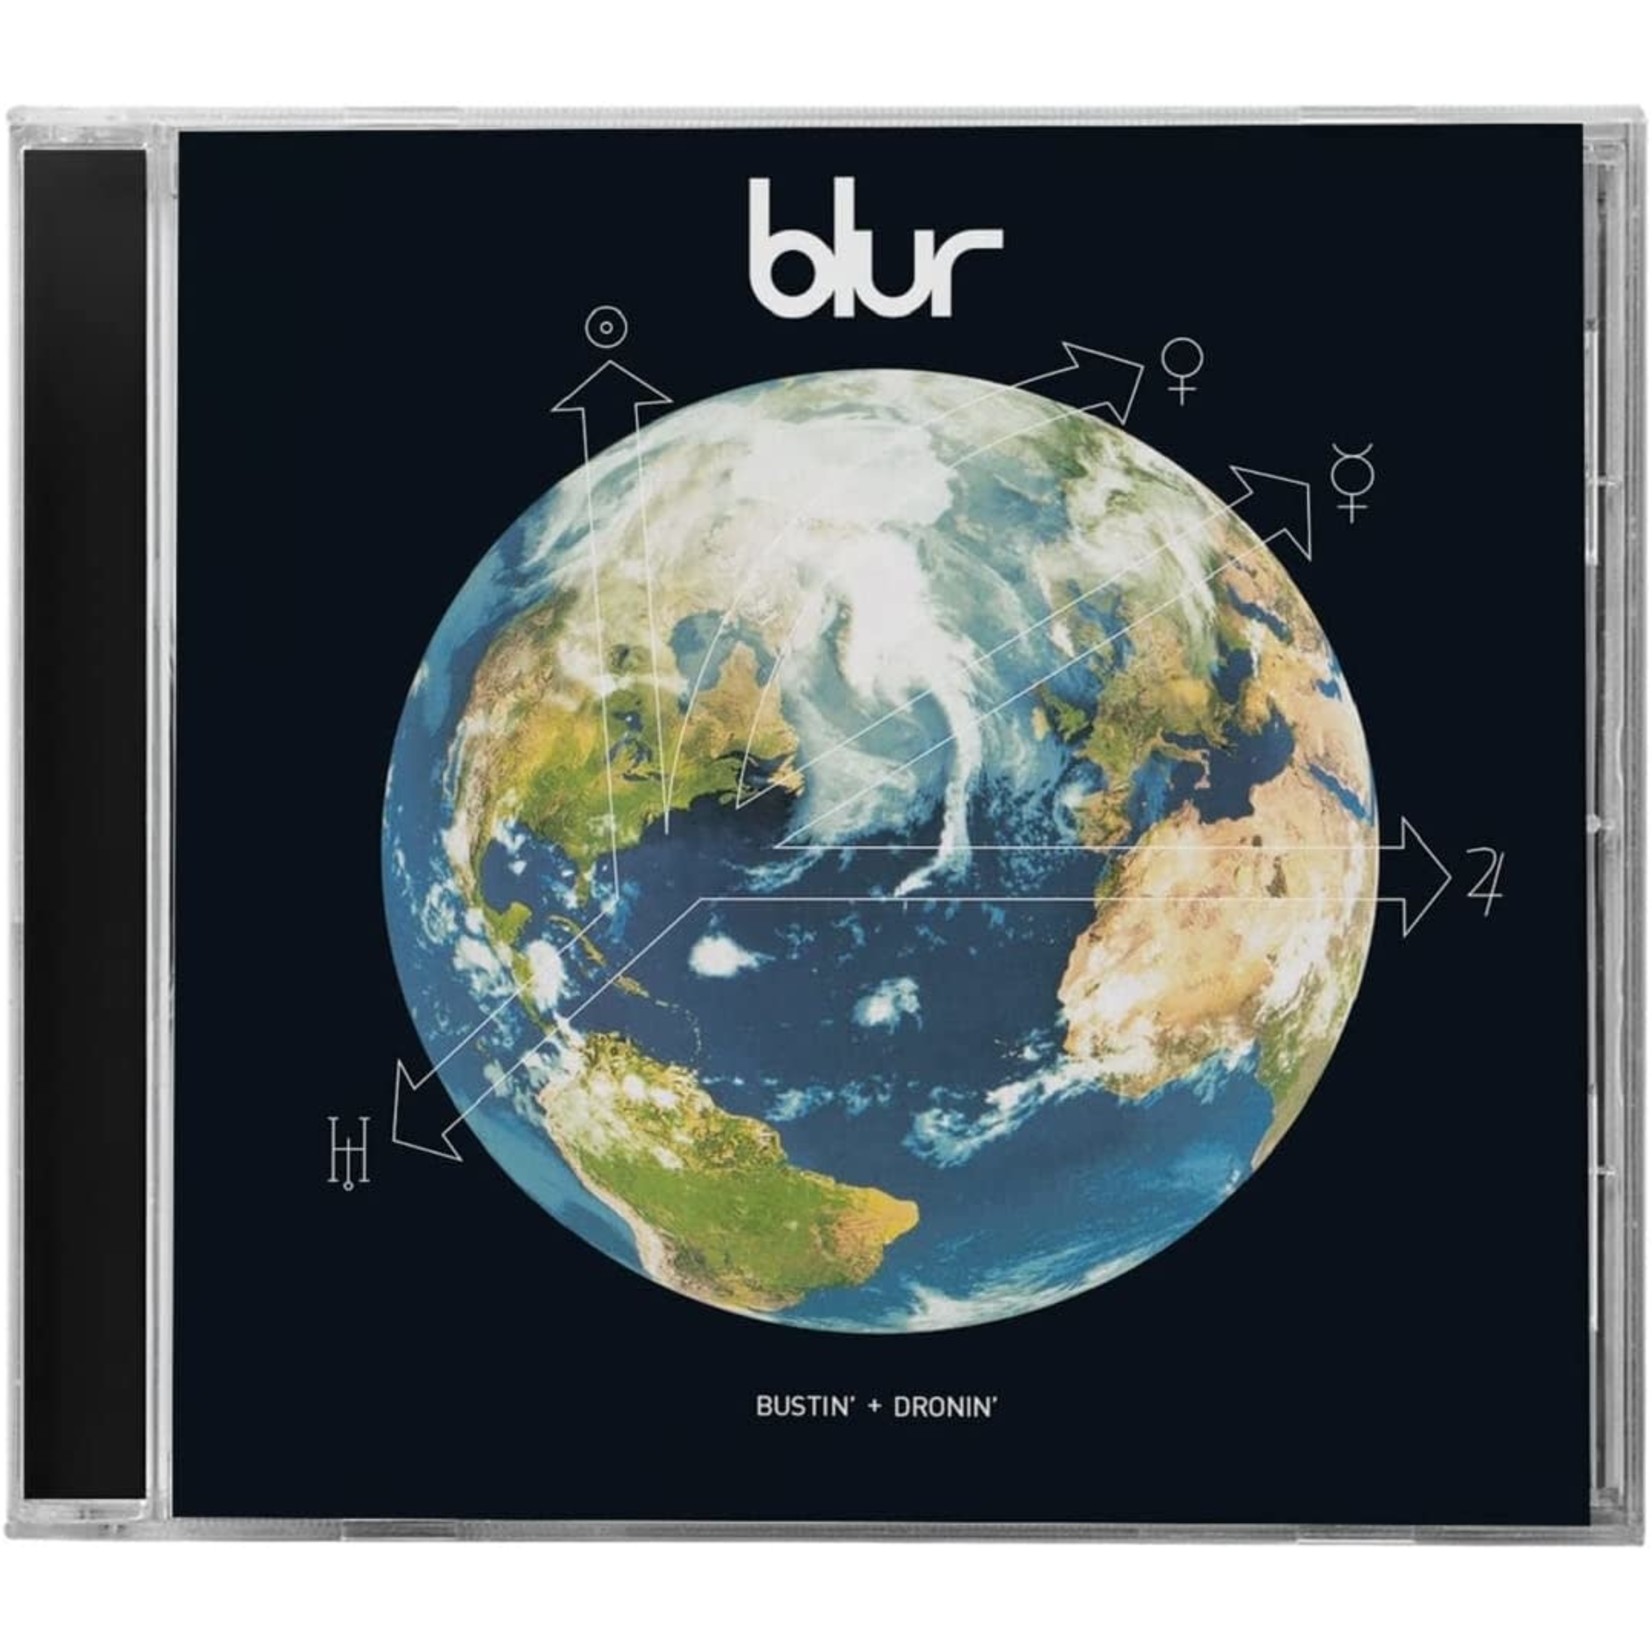 Blur - Bustin' + Dronin' [CD]